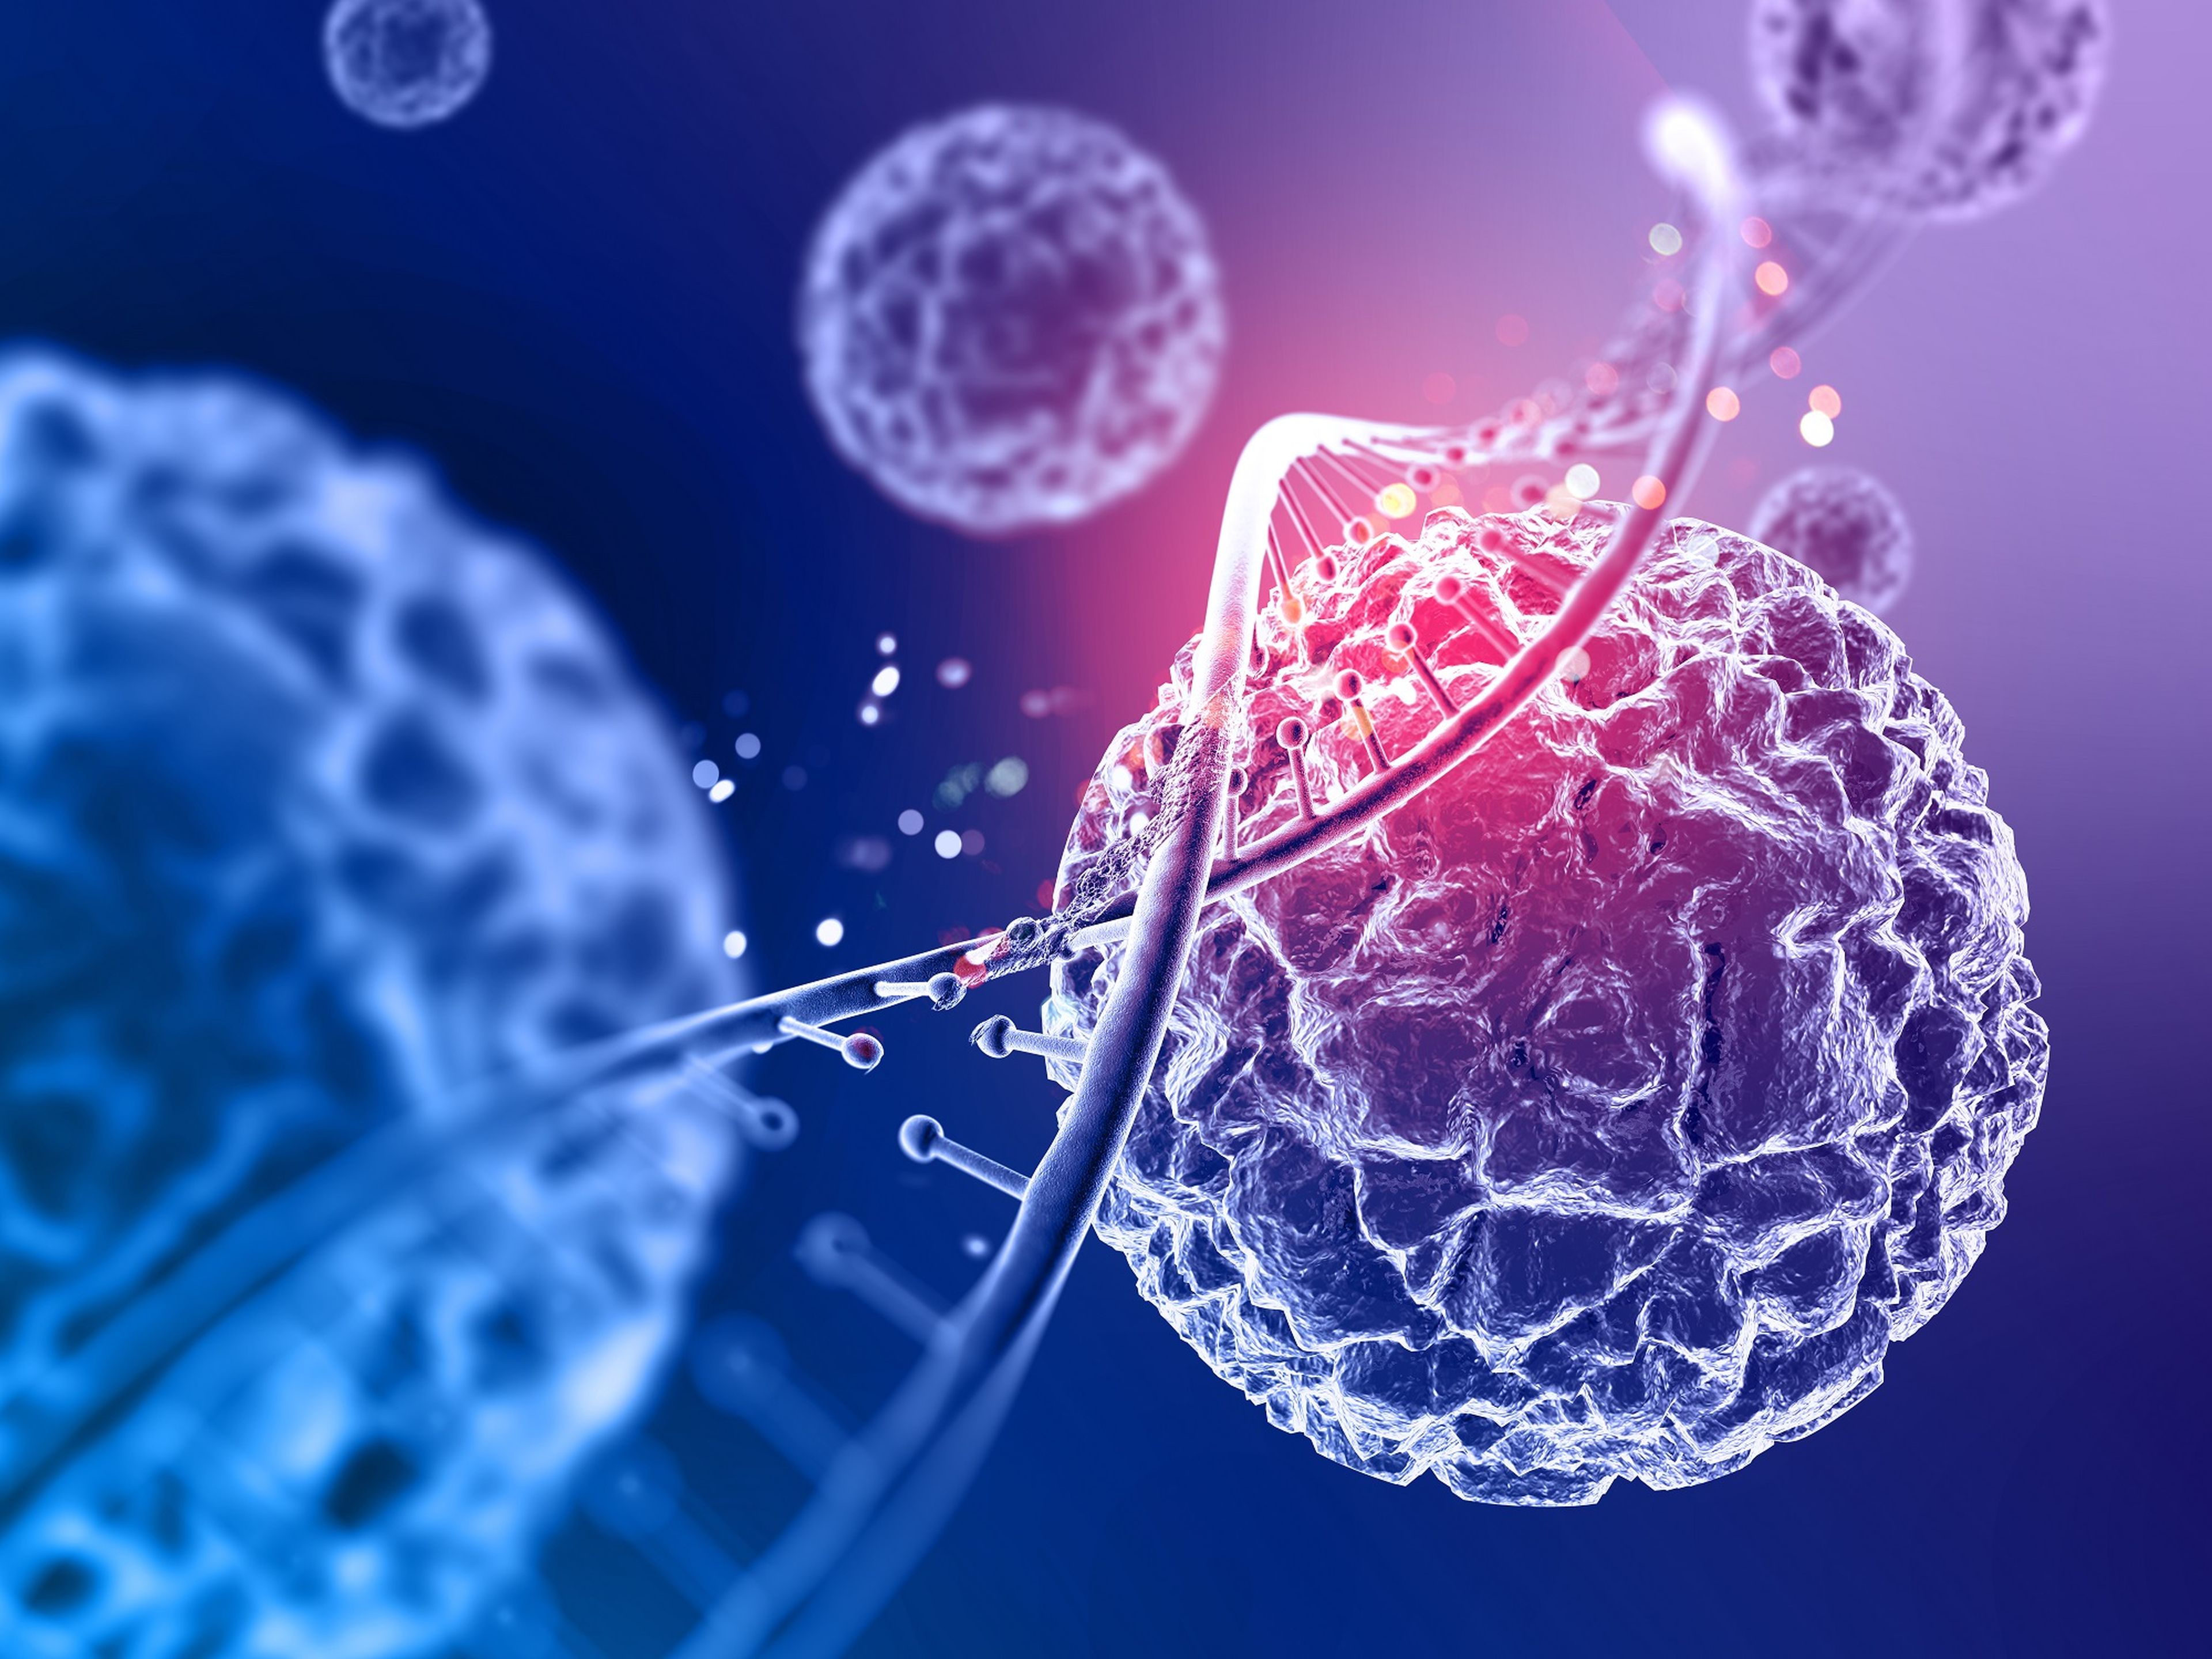 Una terapia génica experimental conocida como CRISPR 2.0 cura una leucemia muy agresiva e "incurable" de un adolescente